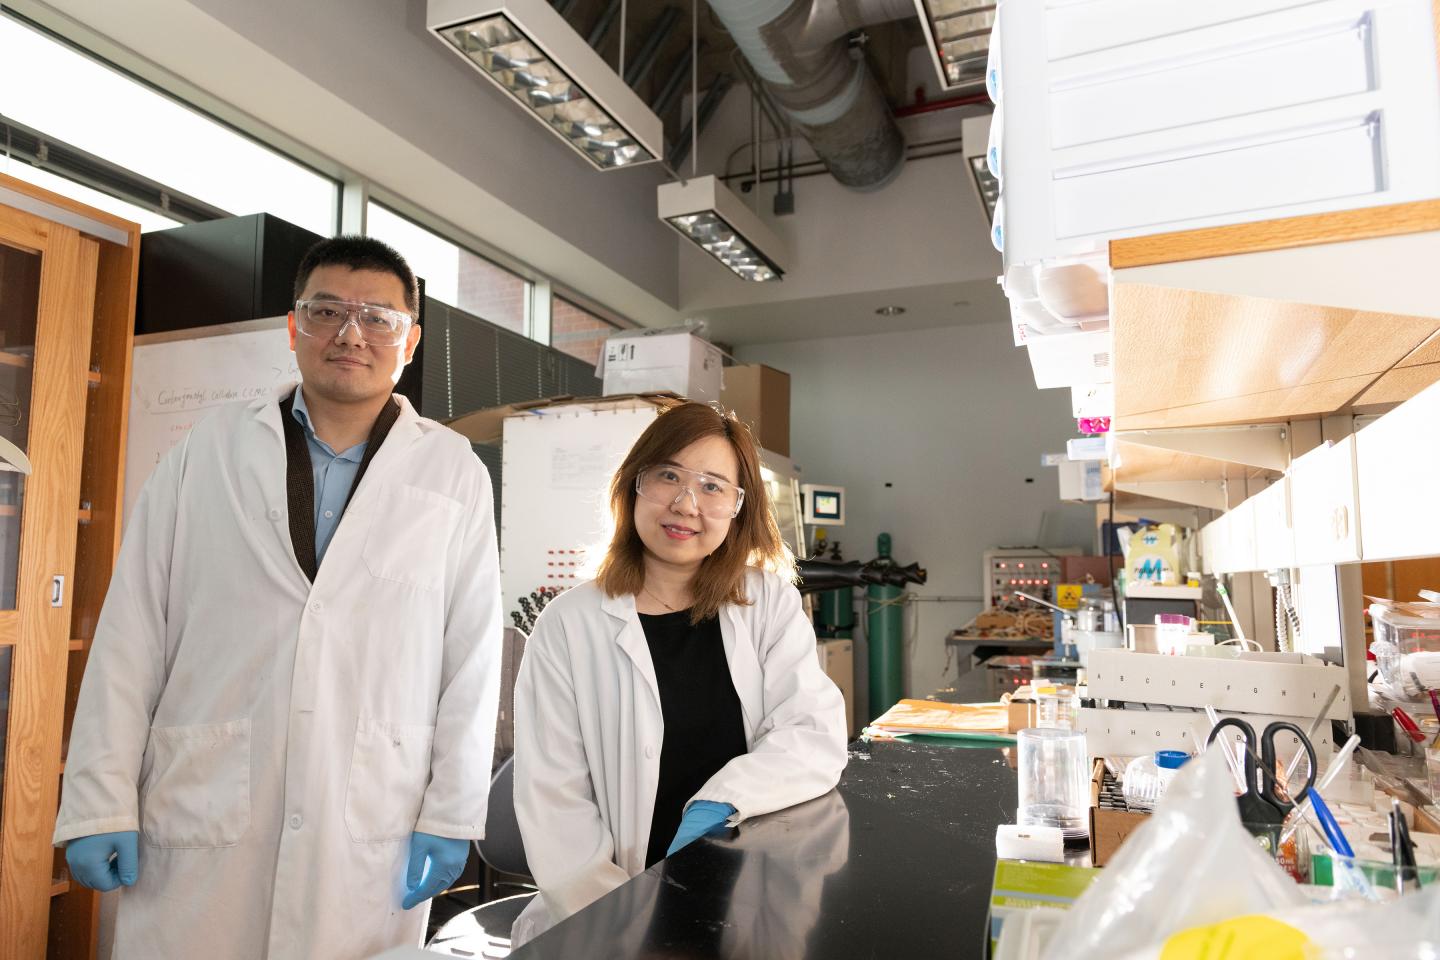 Nanoscale Cobalt Researchers in Laboratory